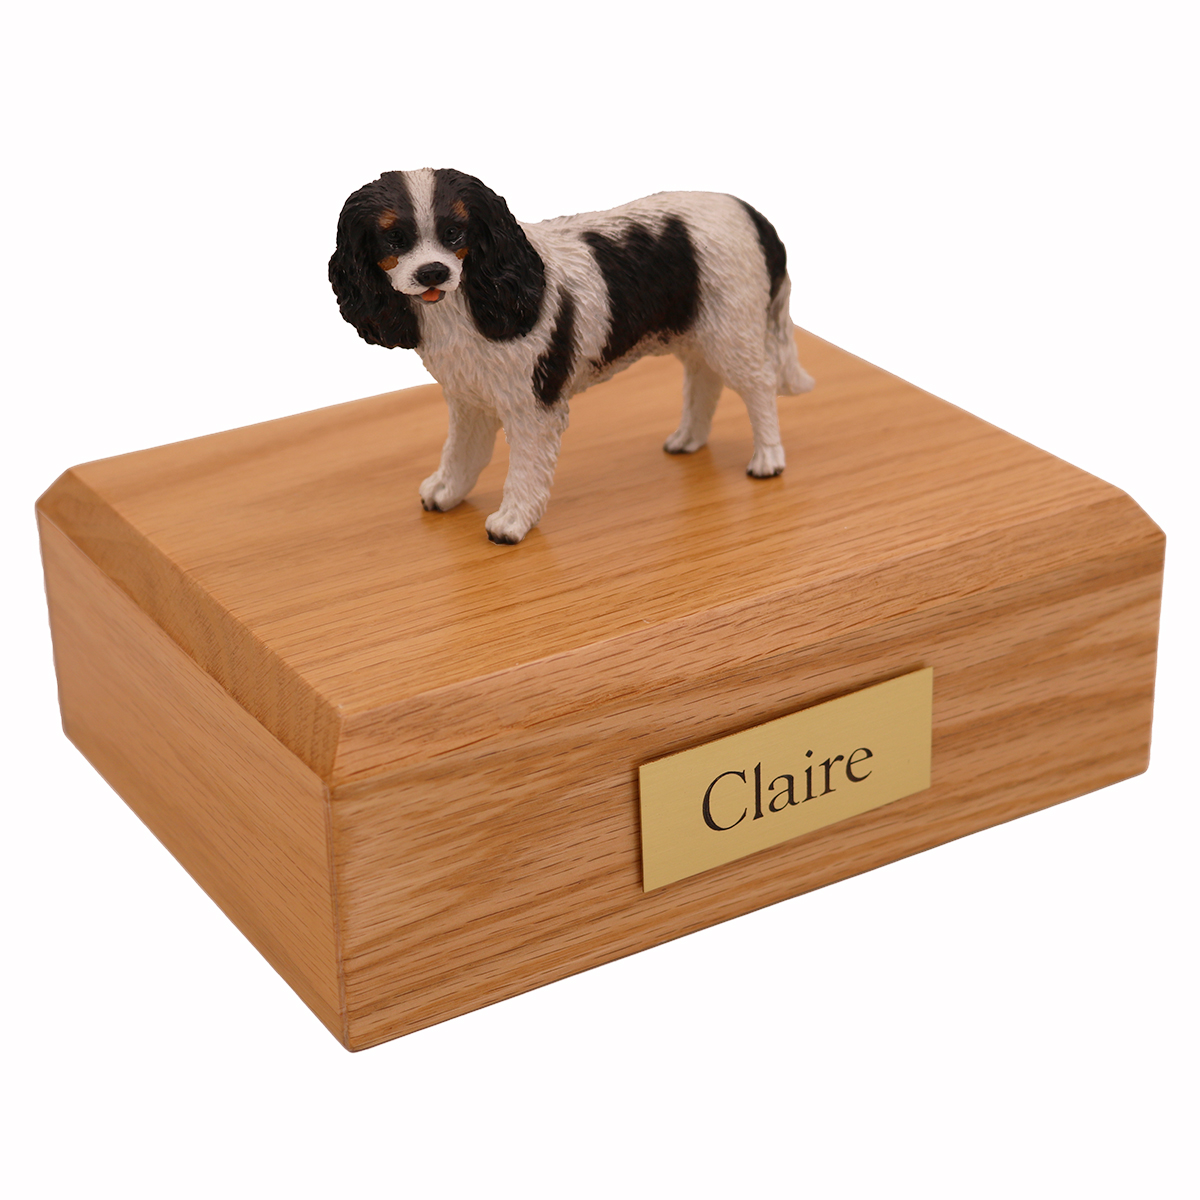 Dog, King Charles Spaniel, Black - Figurine Urn